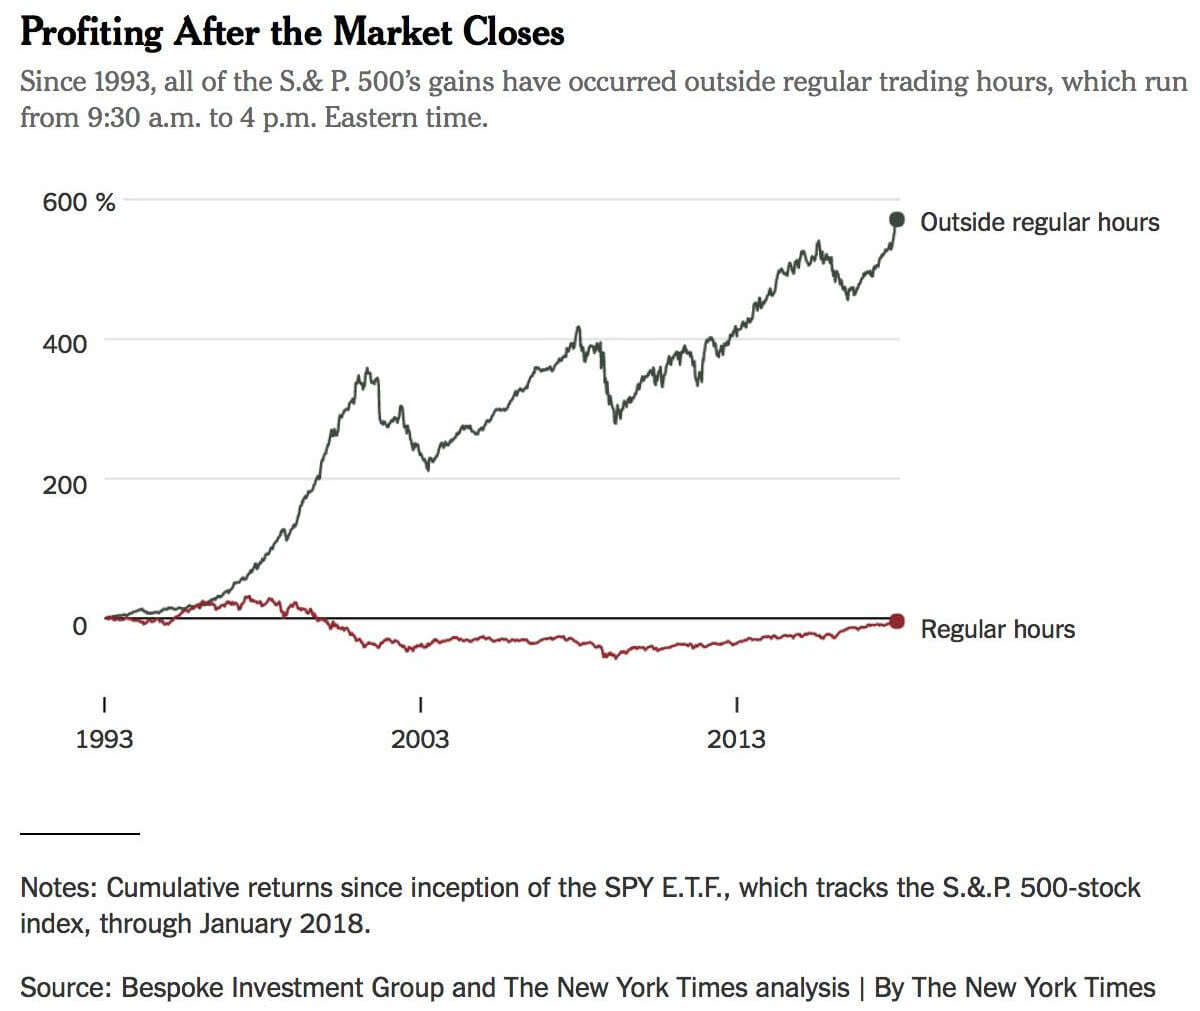 S&P 500 Gains Outside Regular Trading Hours